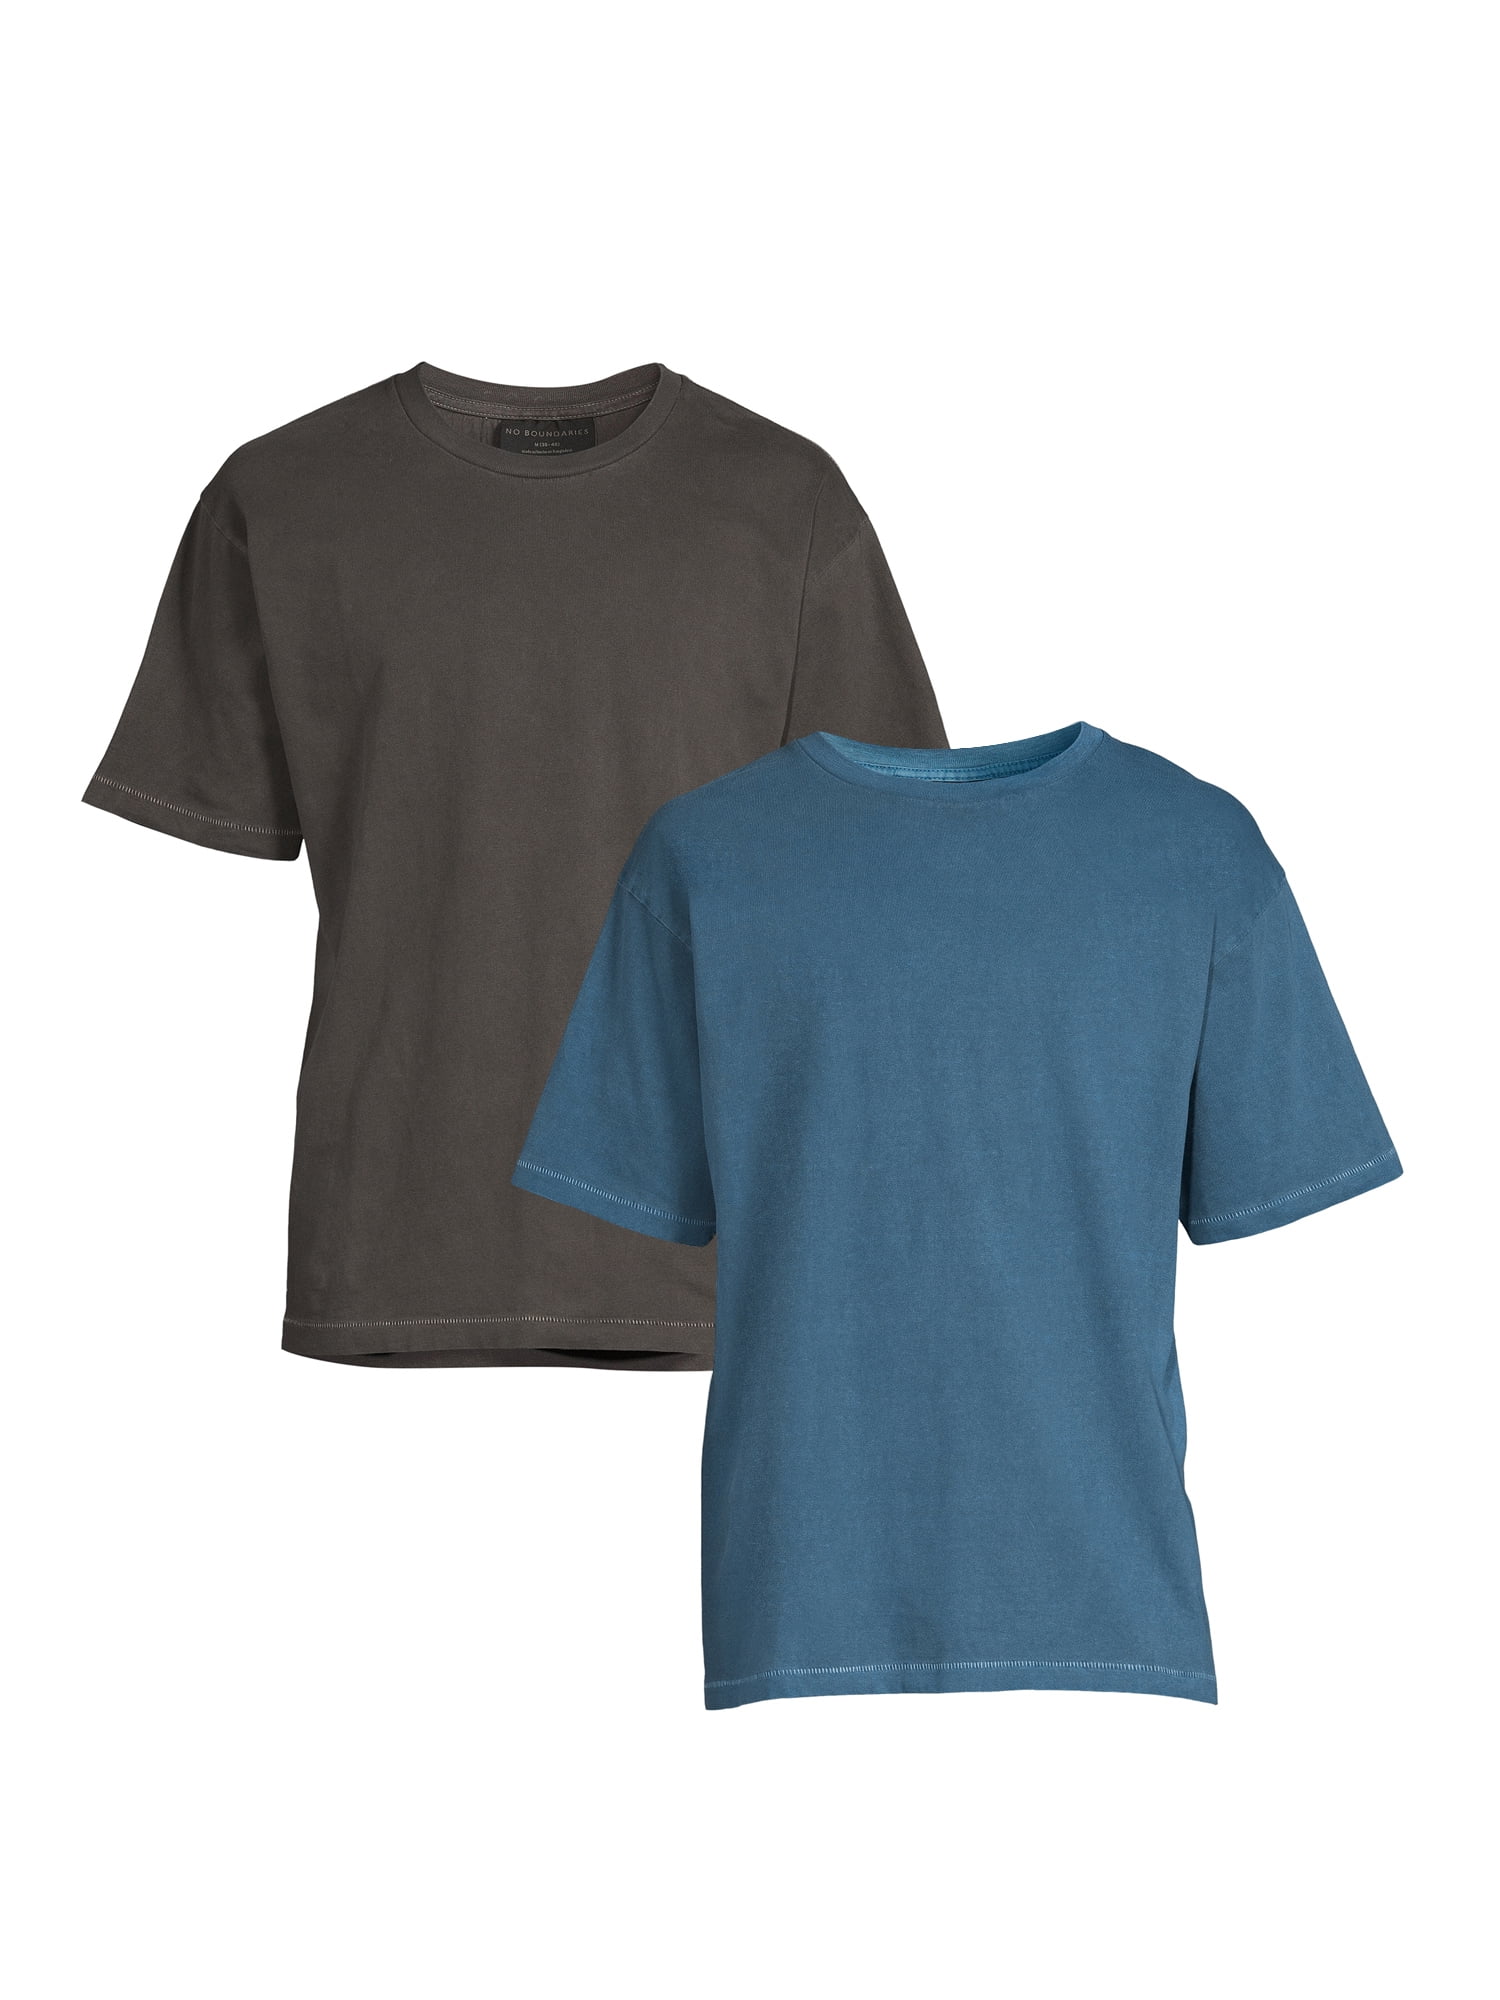 No Boundaries Men's Short Sleeve Oversized T-Shirt Green Small (34-36)